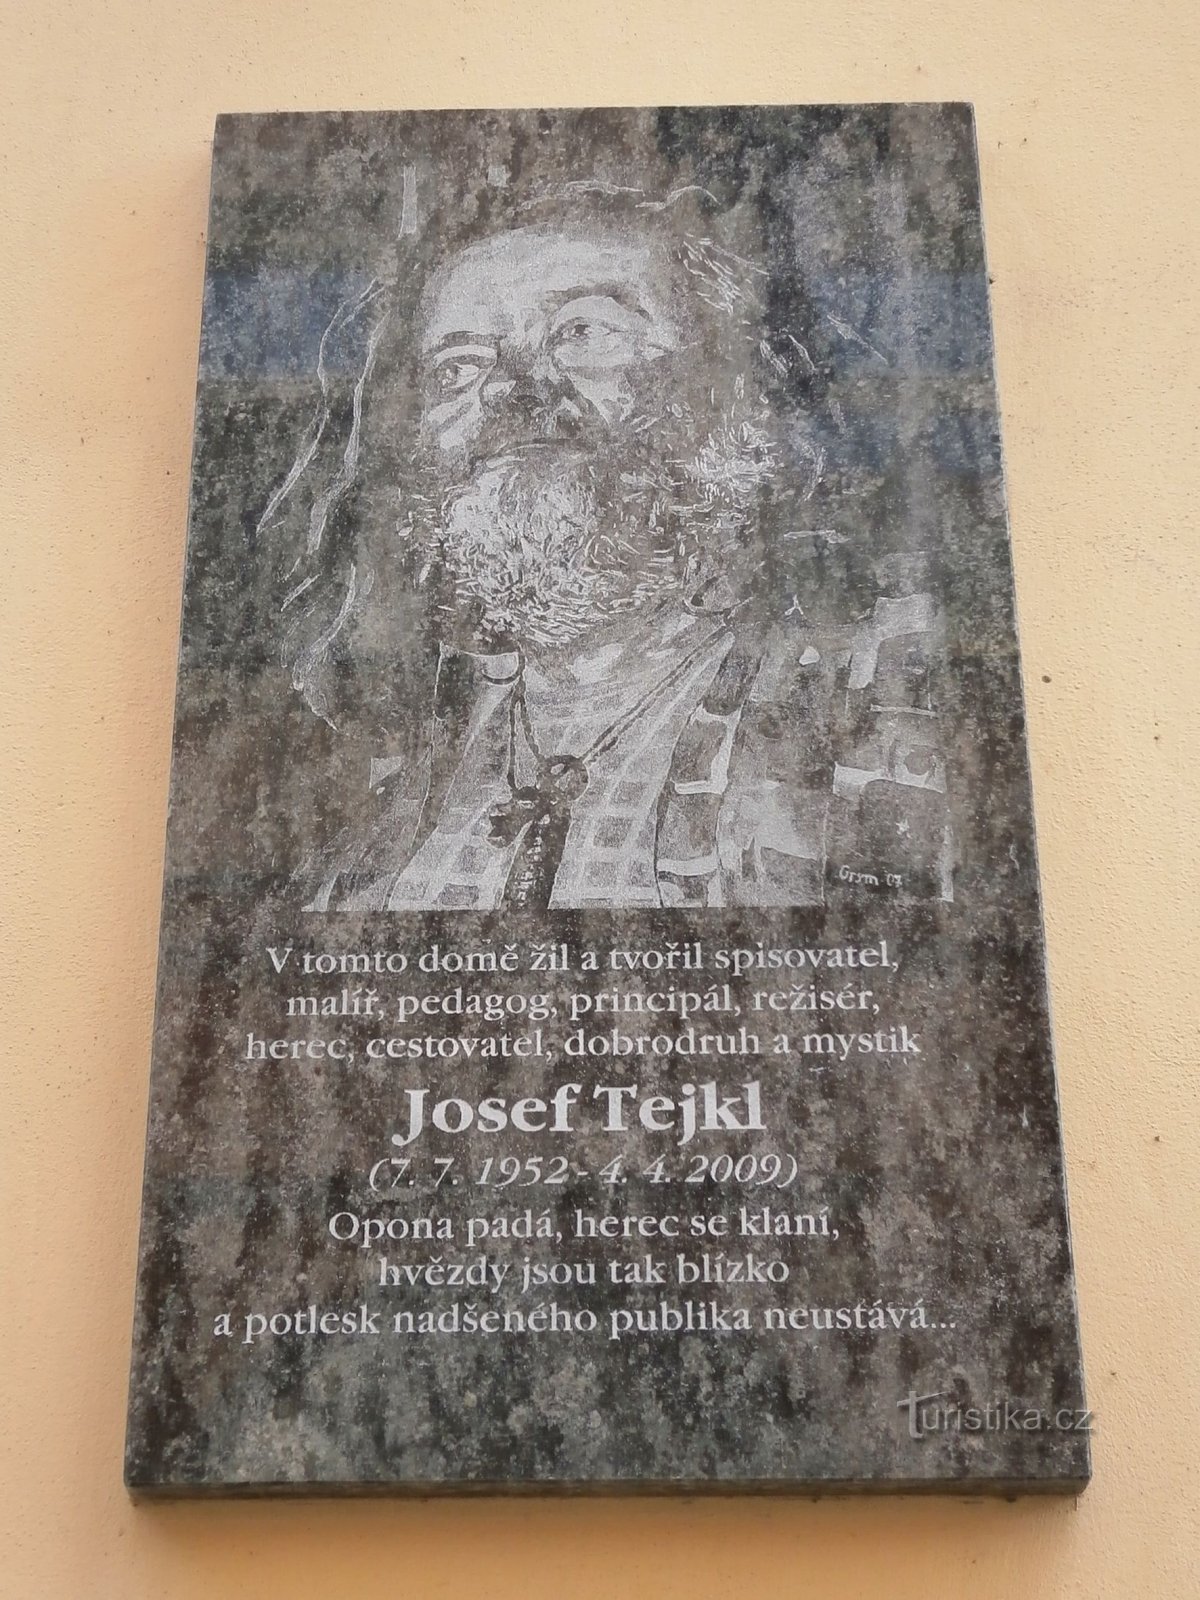 Placa conmemorativa a Josef Tejkl (Hradec Králové, 15.7.2013)